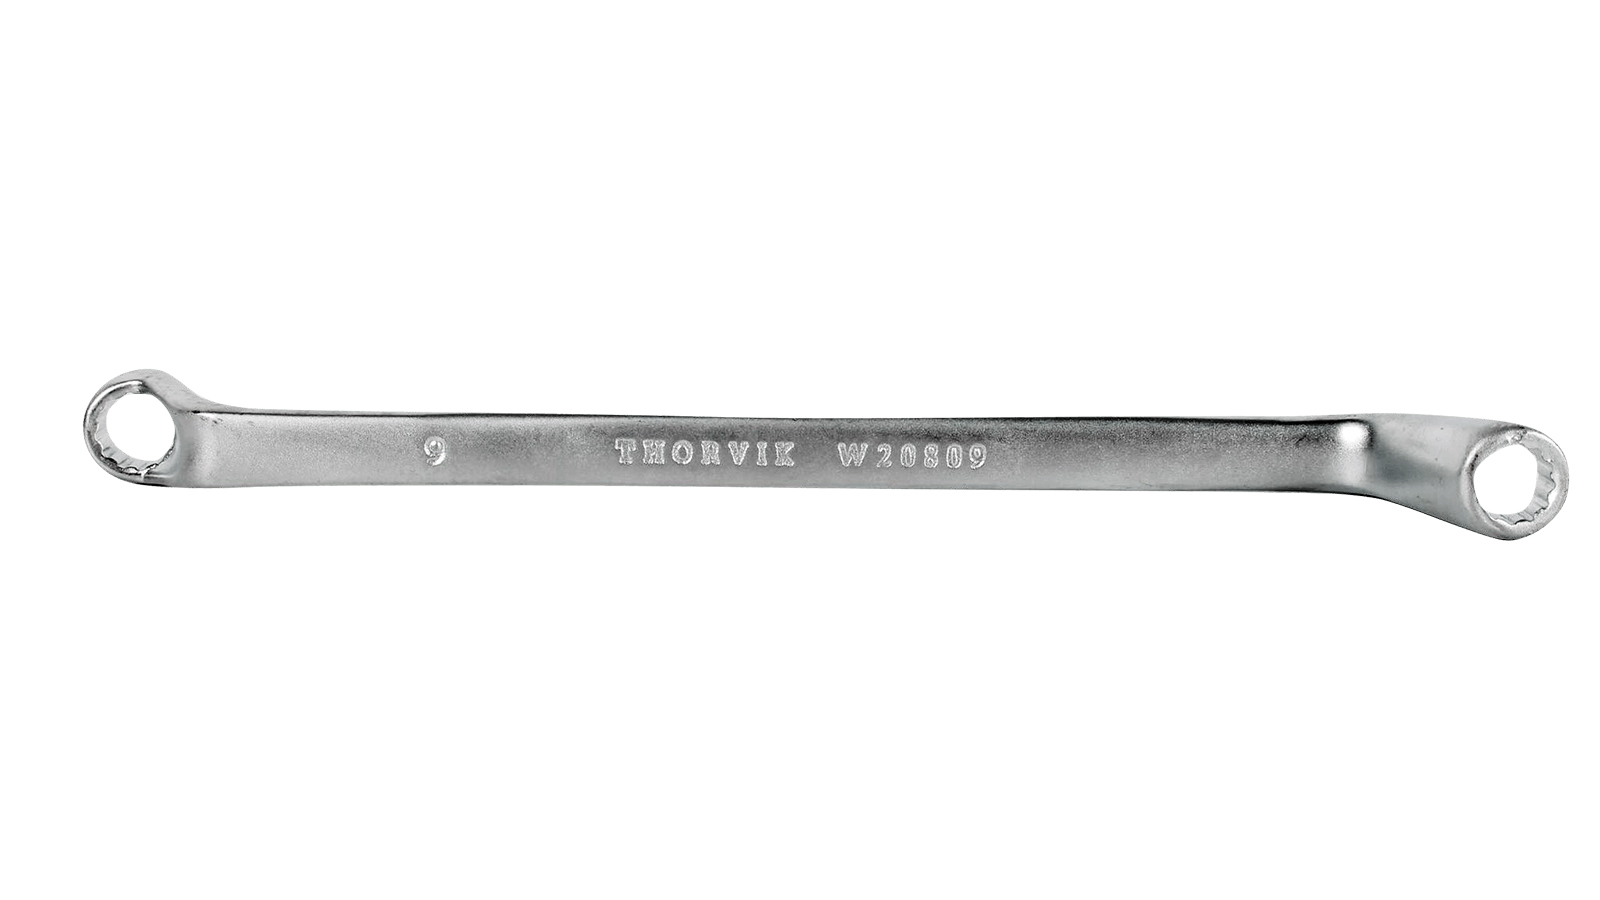 Ключ Накидной  8 Х 9 Thorvik Серии Arc THORVIK арт. W20809 имбусовый ключ thorvik hex 5 мм